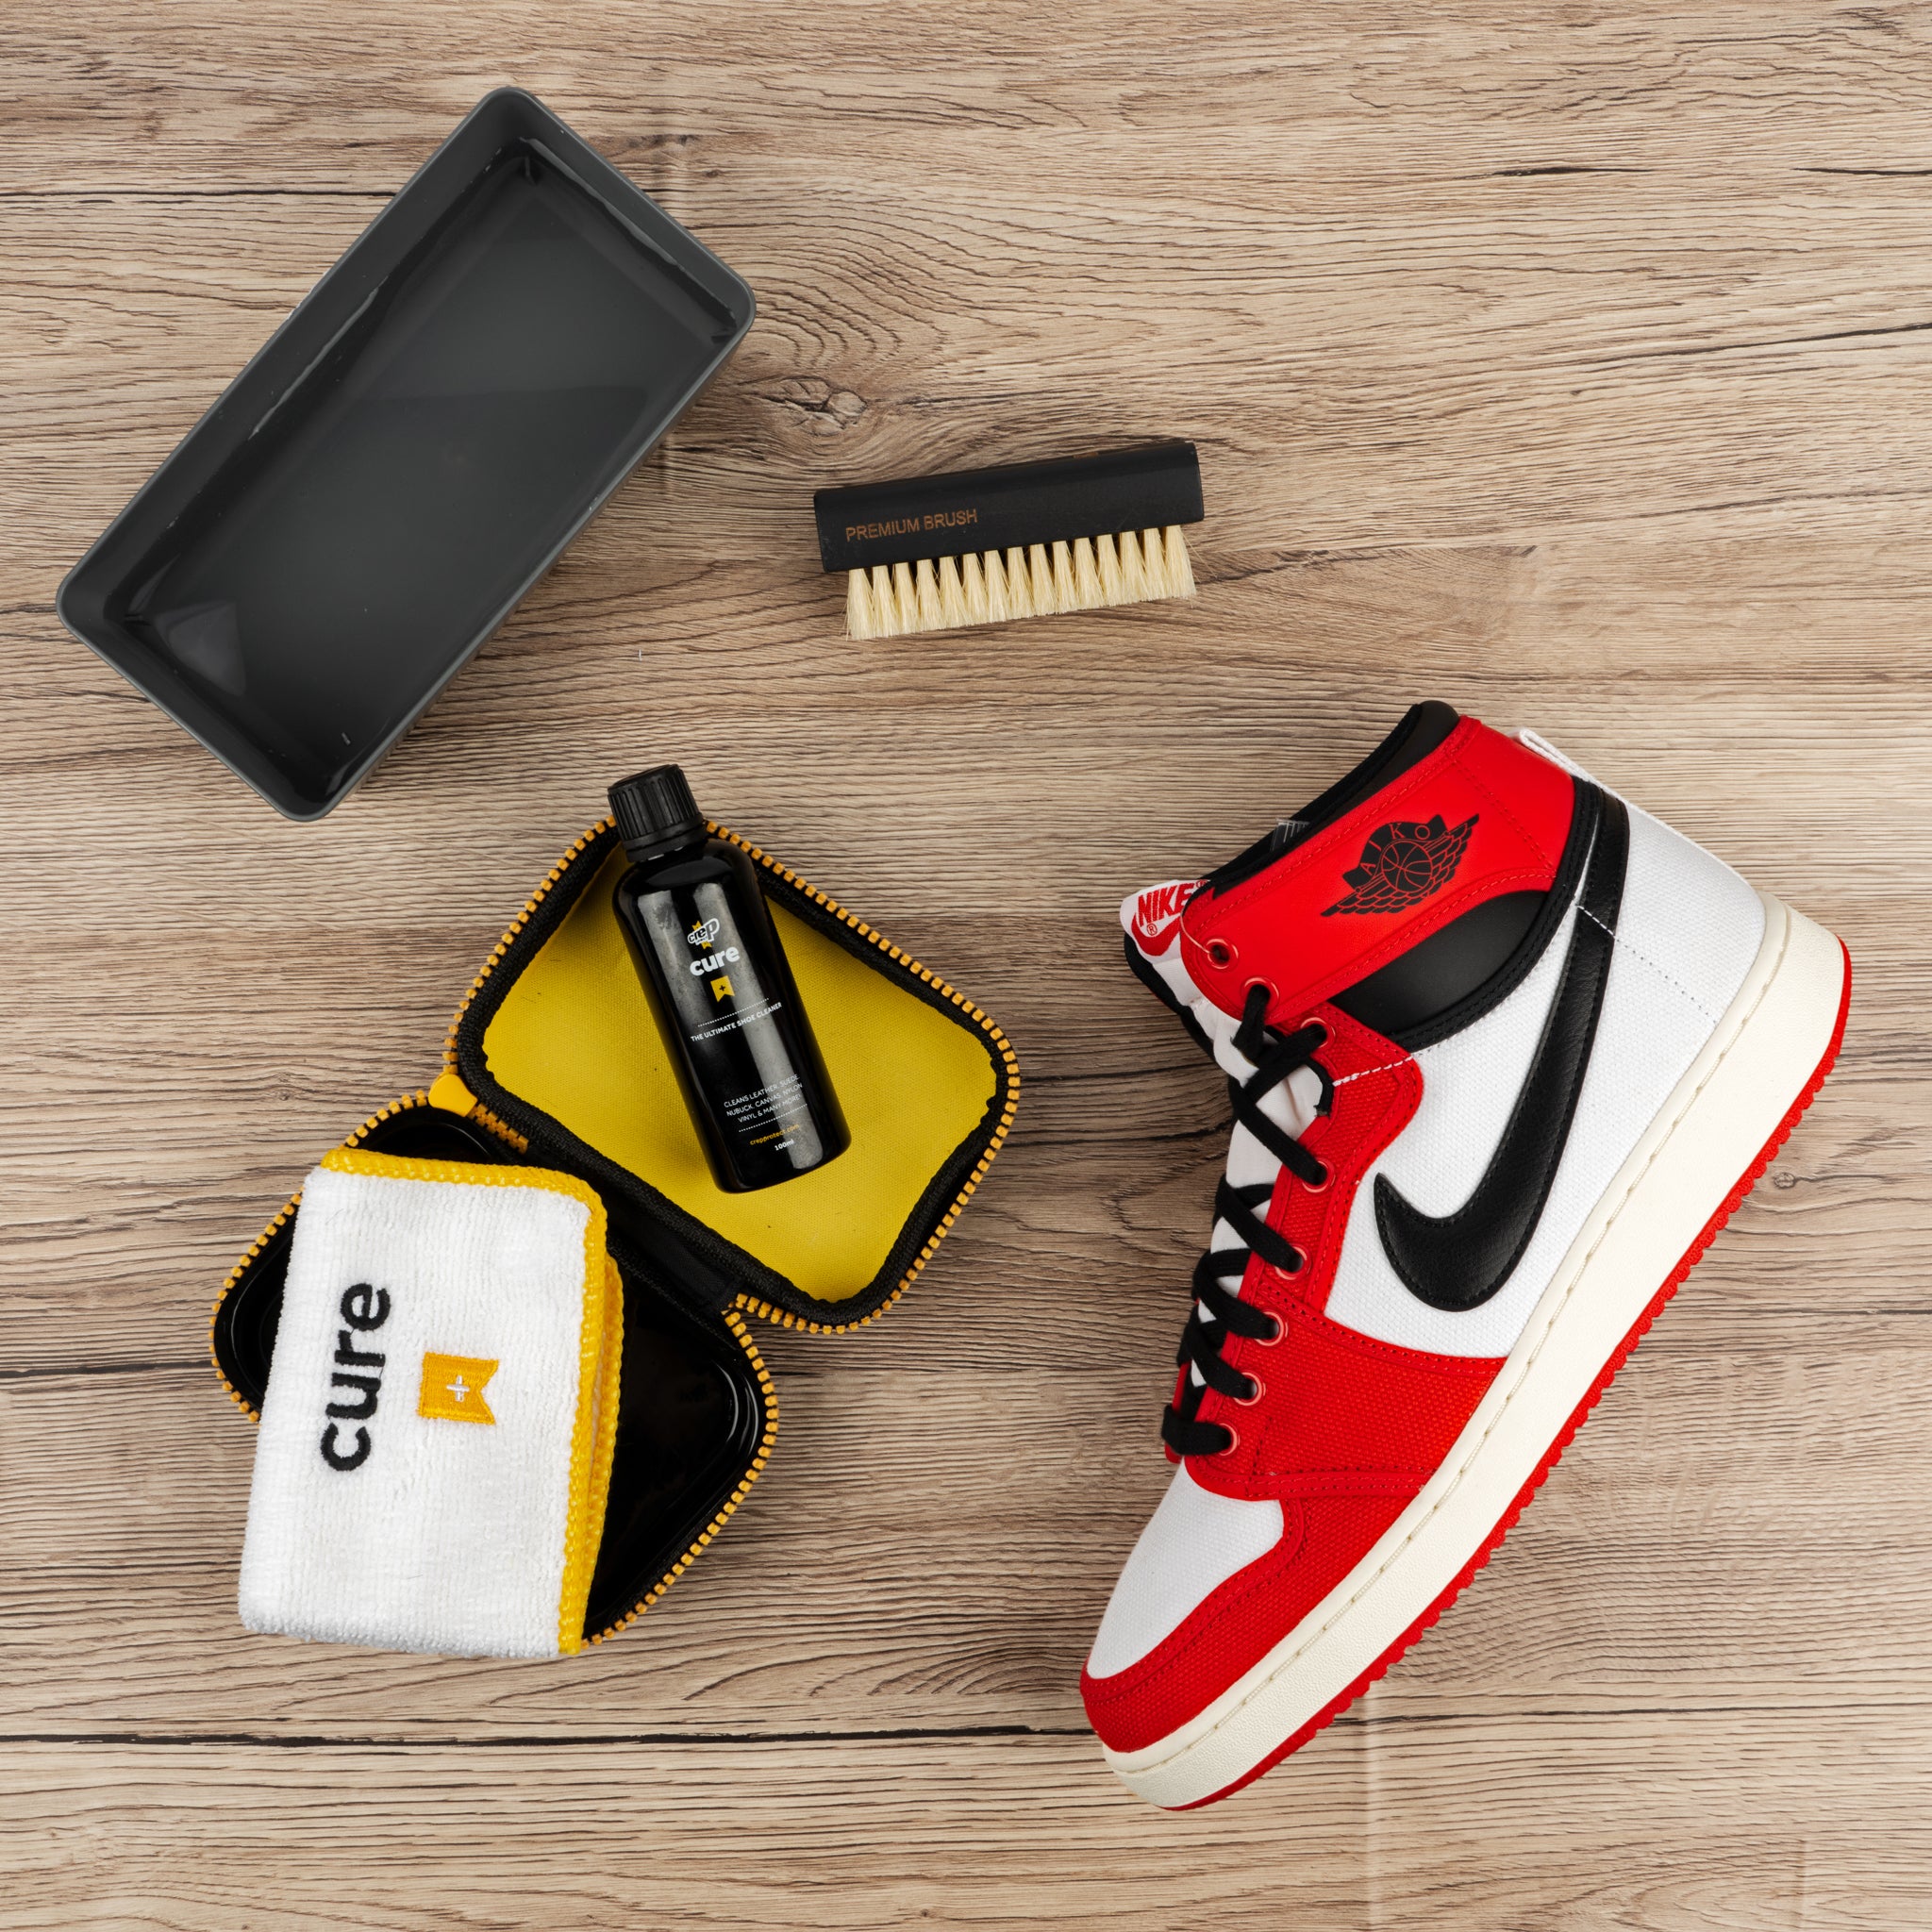 Crep Protect Cleaning-kit - Sneaker-care | Trendiga kläder & skor - Merchsweden |